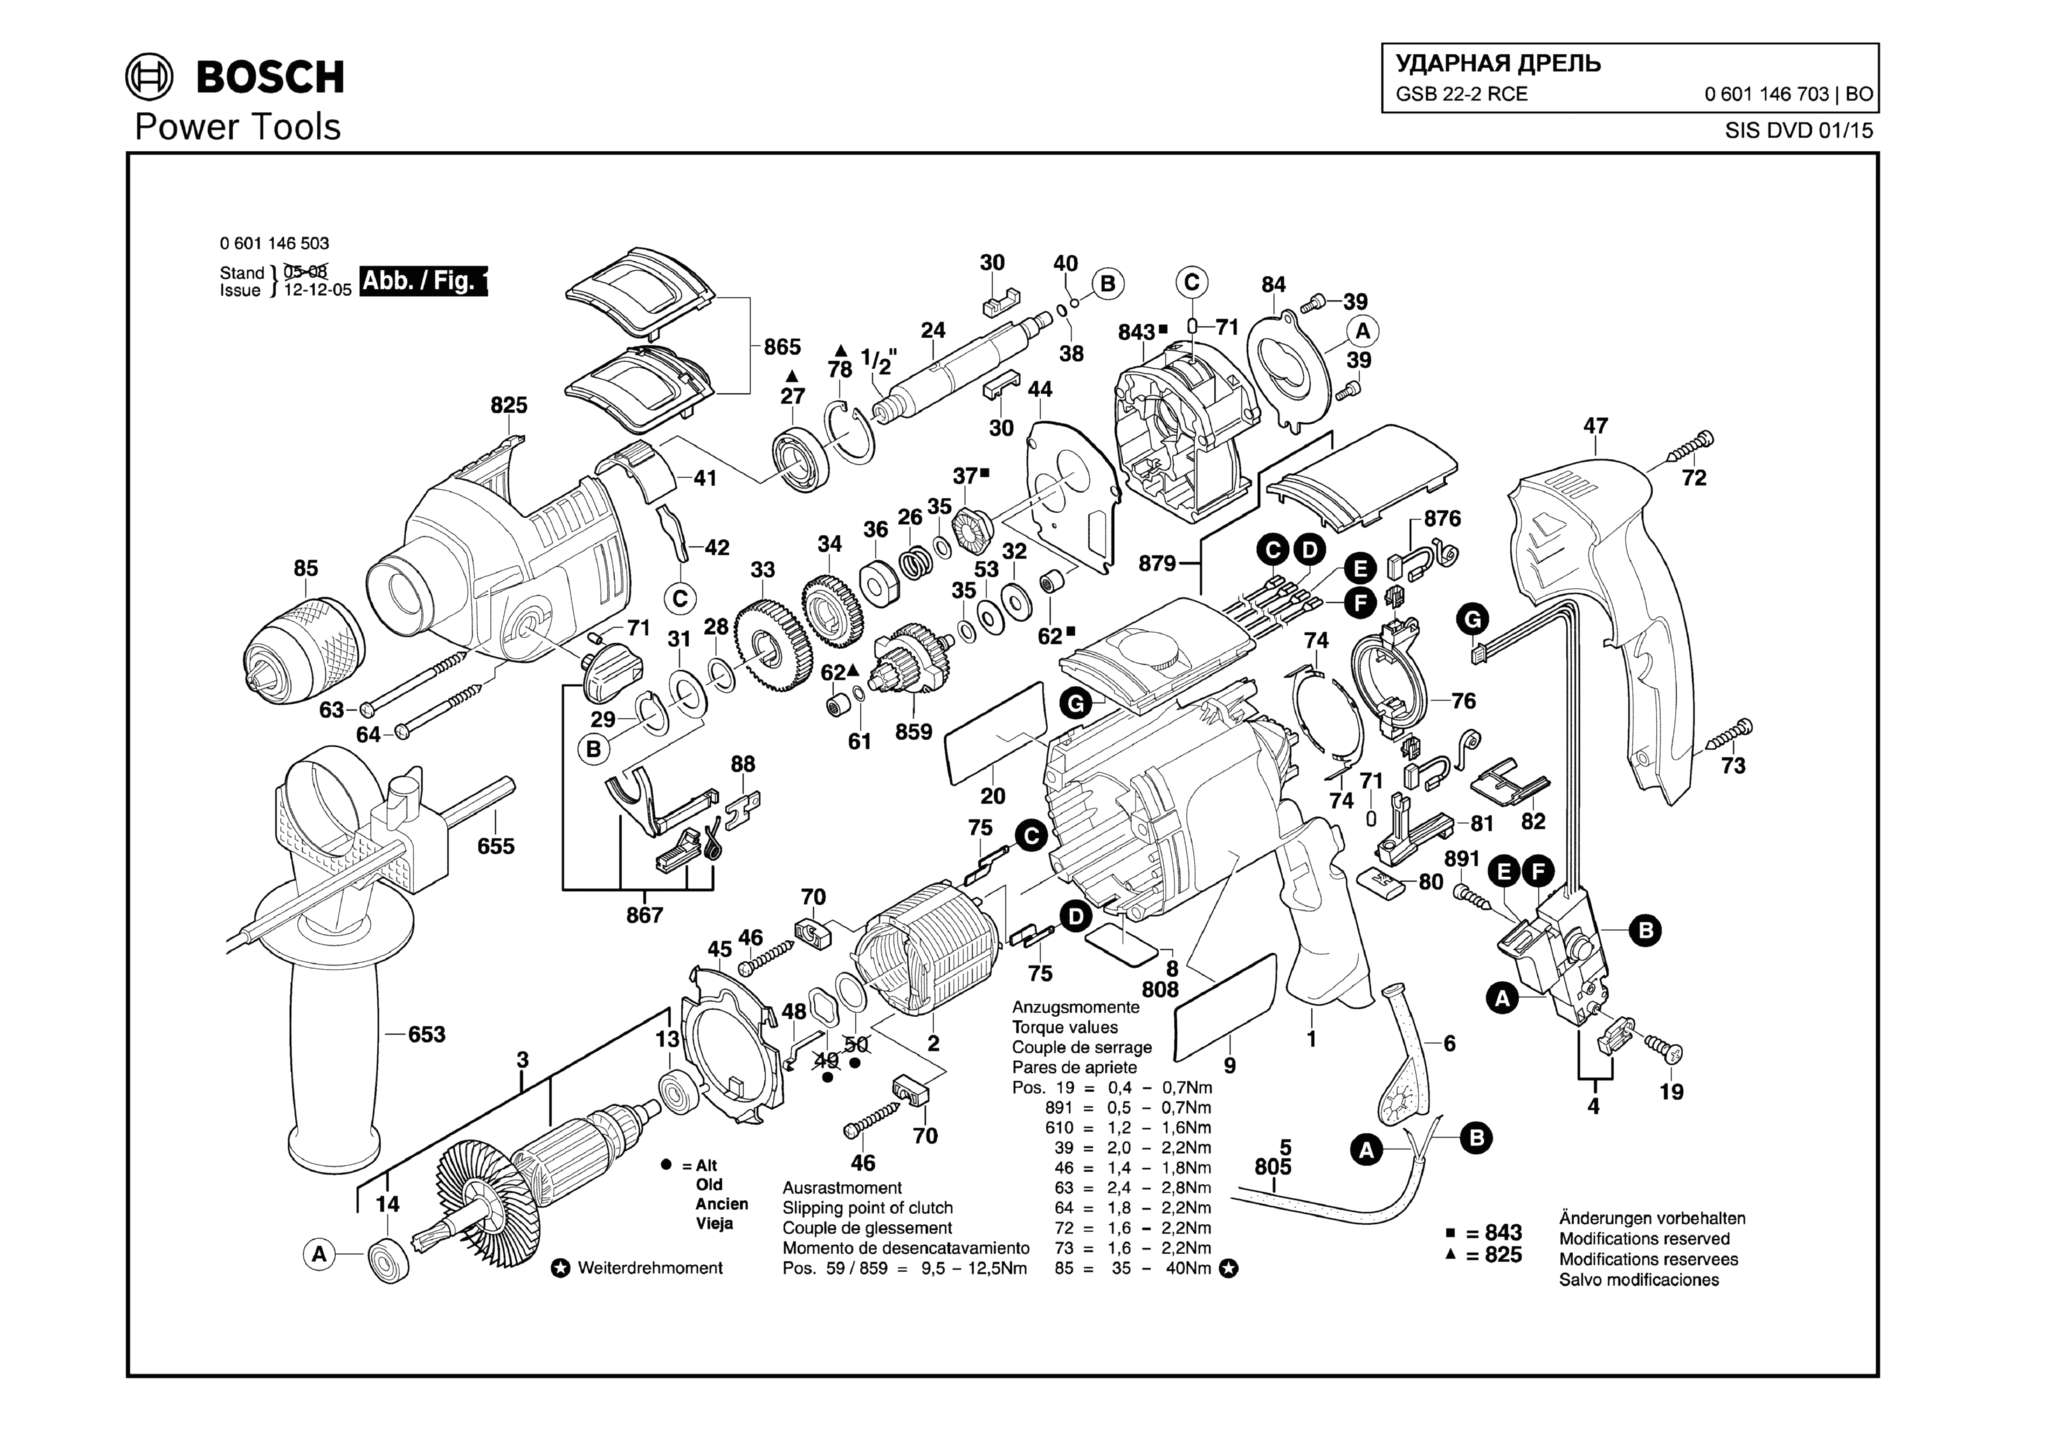 Запчасти, схема и деталировка Bosch GSB 22-2 RCE (ТИП 0601146703)